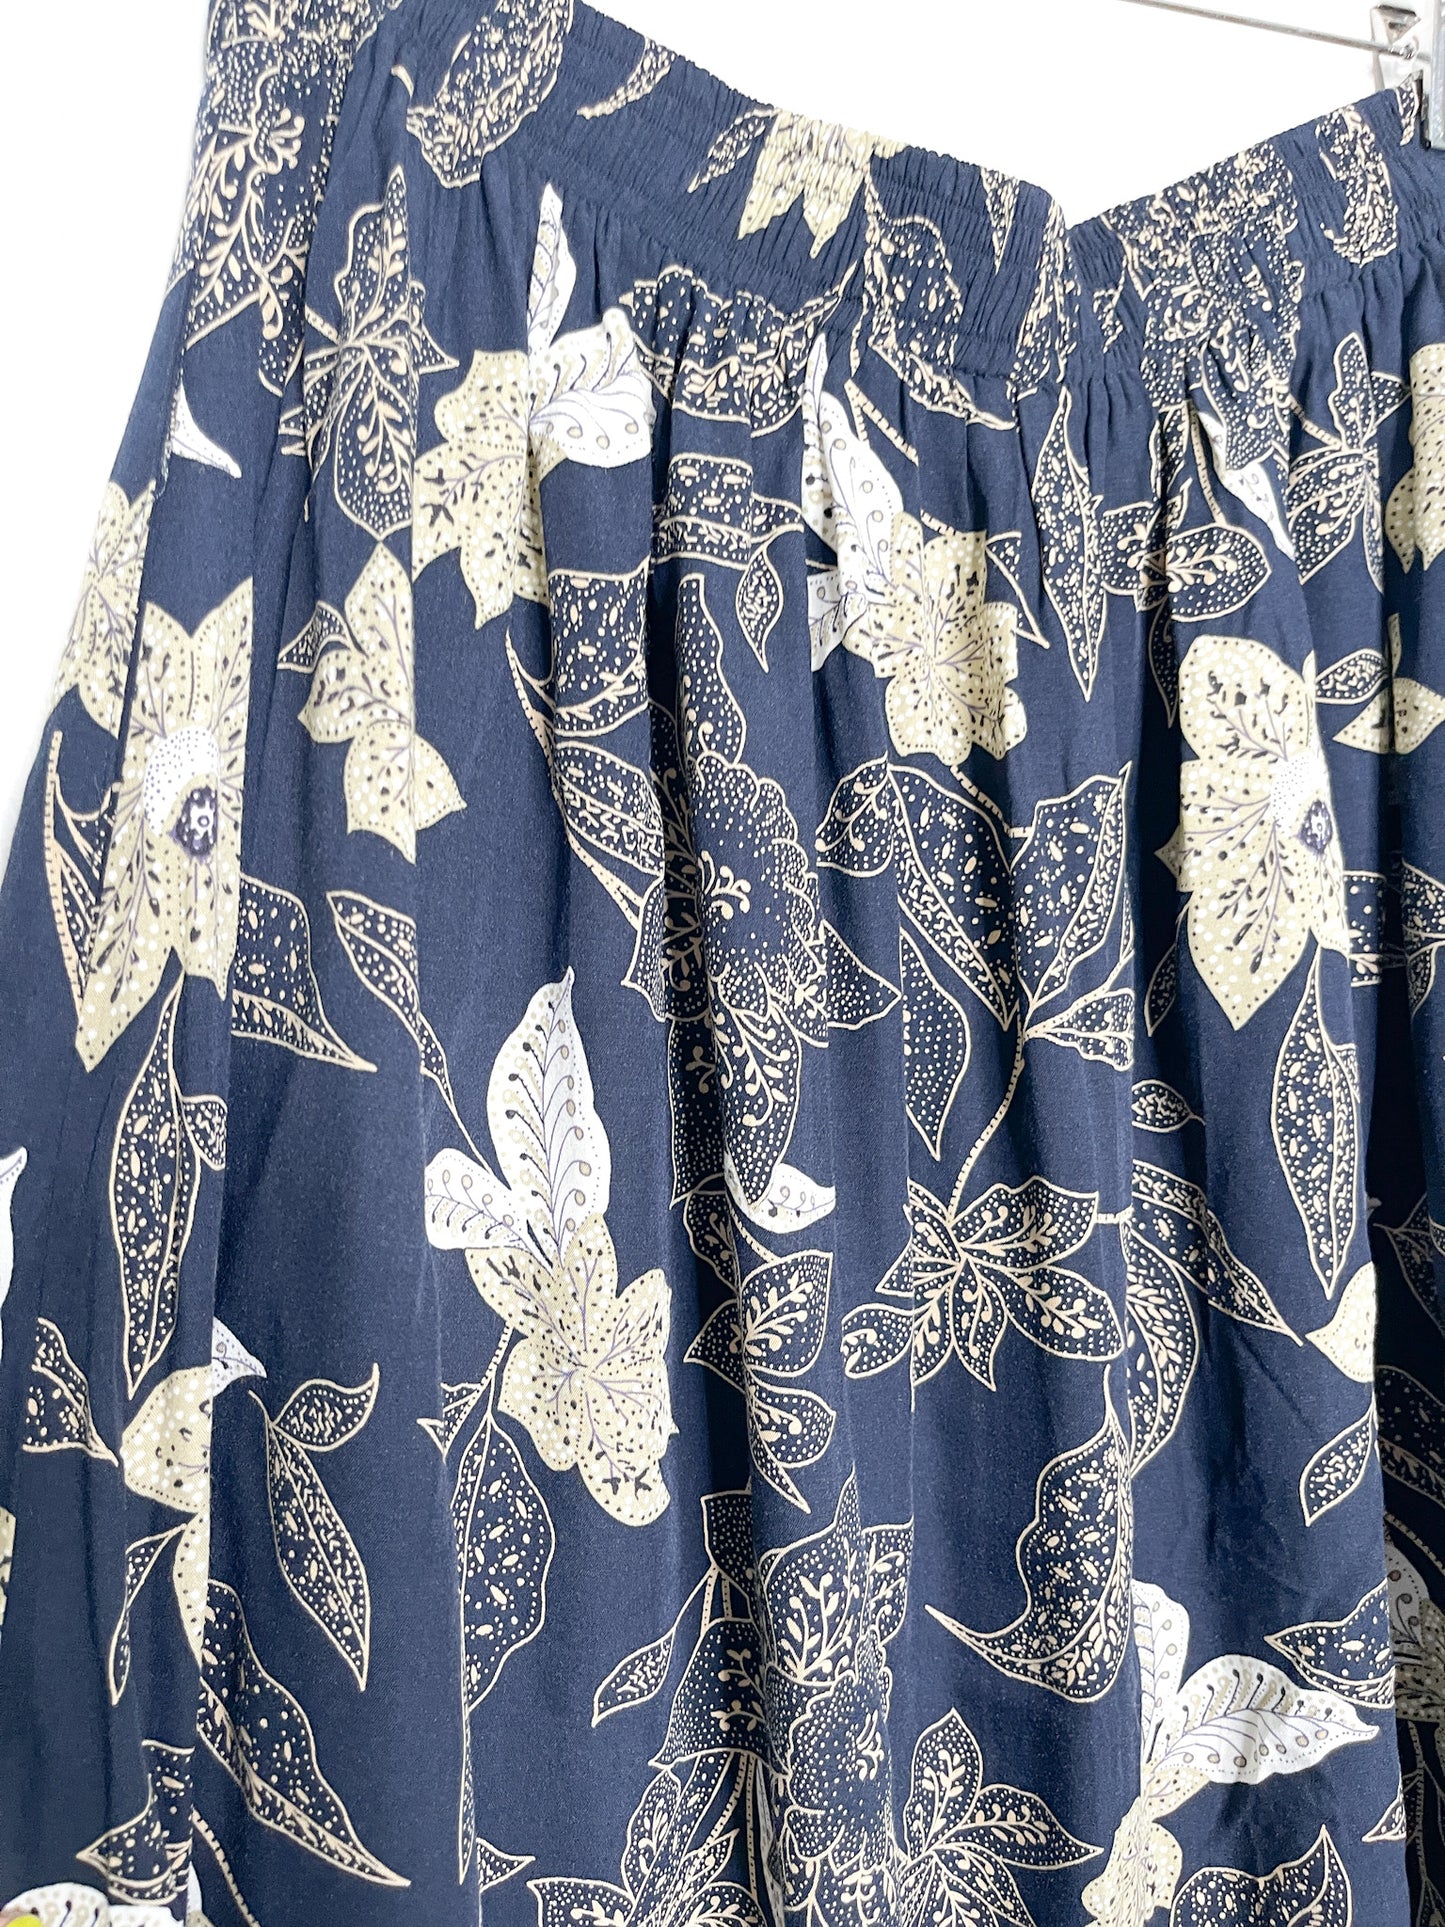 Vintage Principle Collection Floral Printed Skirt Size Large - XTRA Large | Floral A-Line Skirt | Navy Blue Skirt